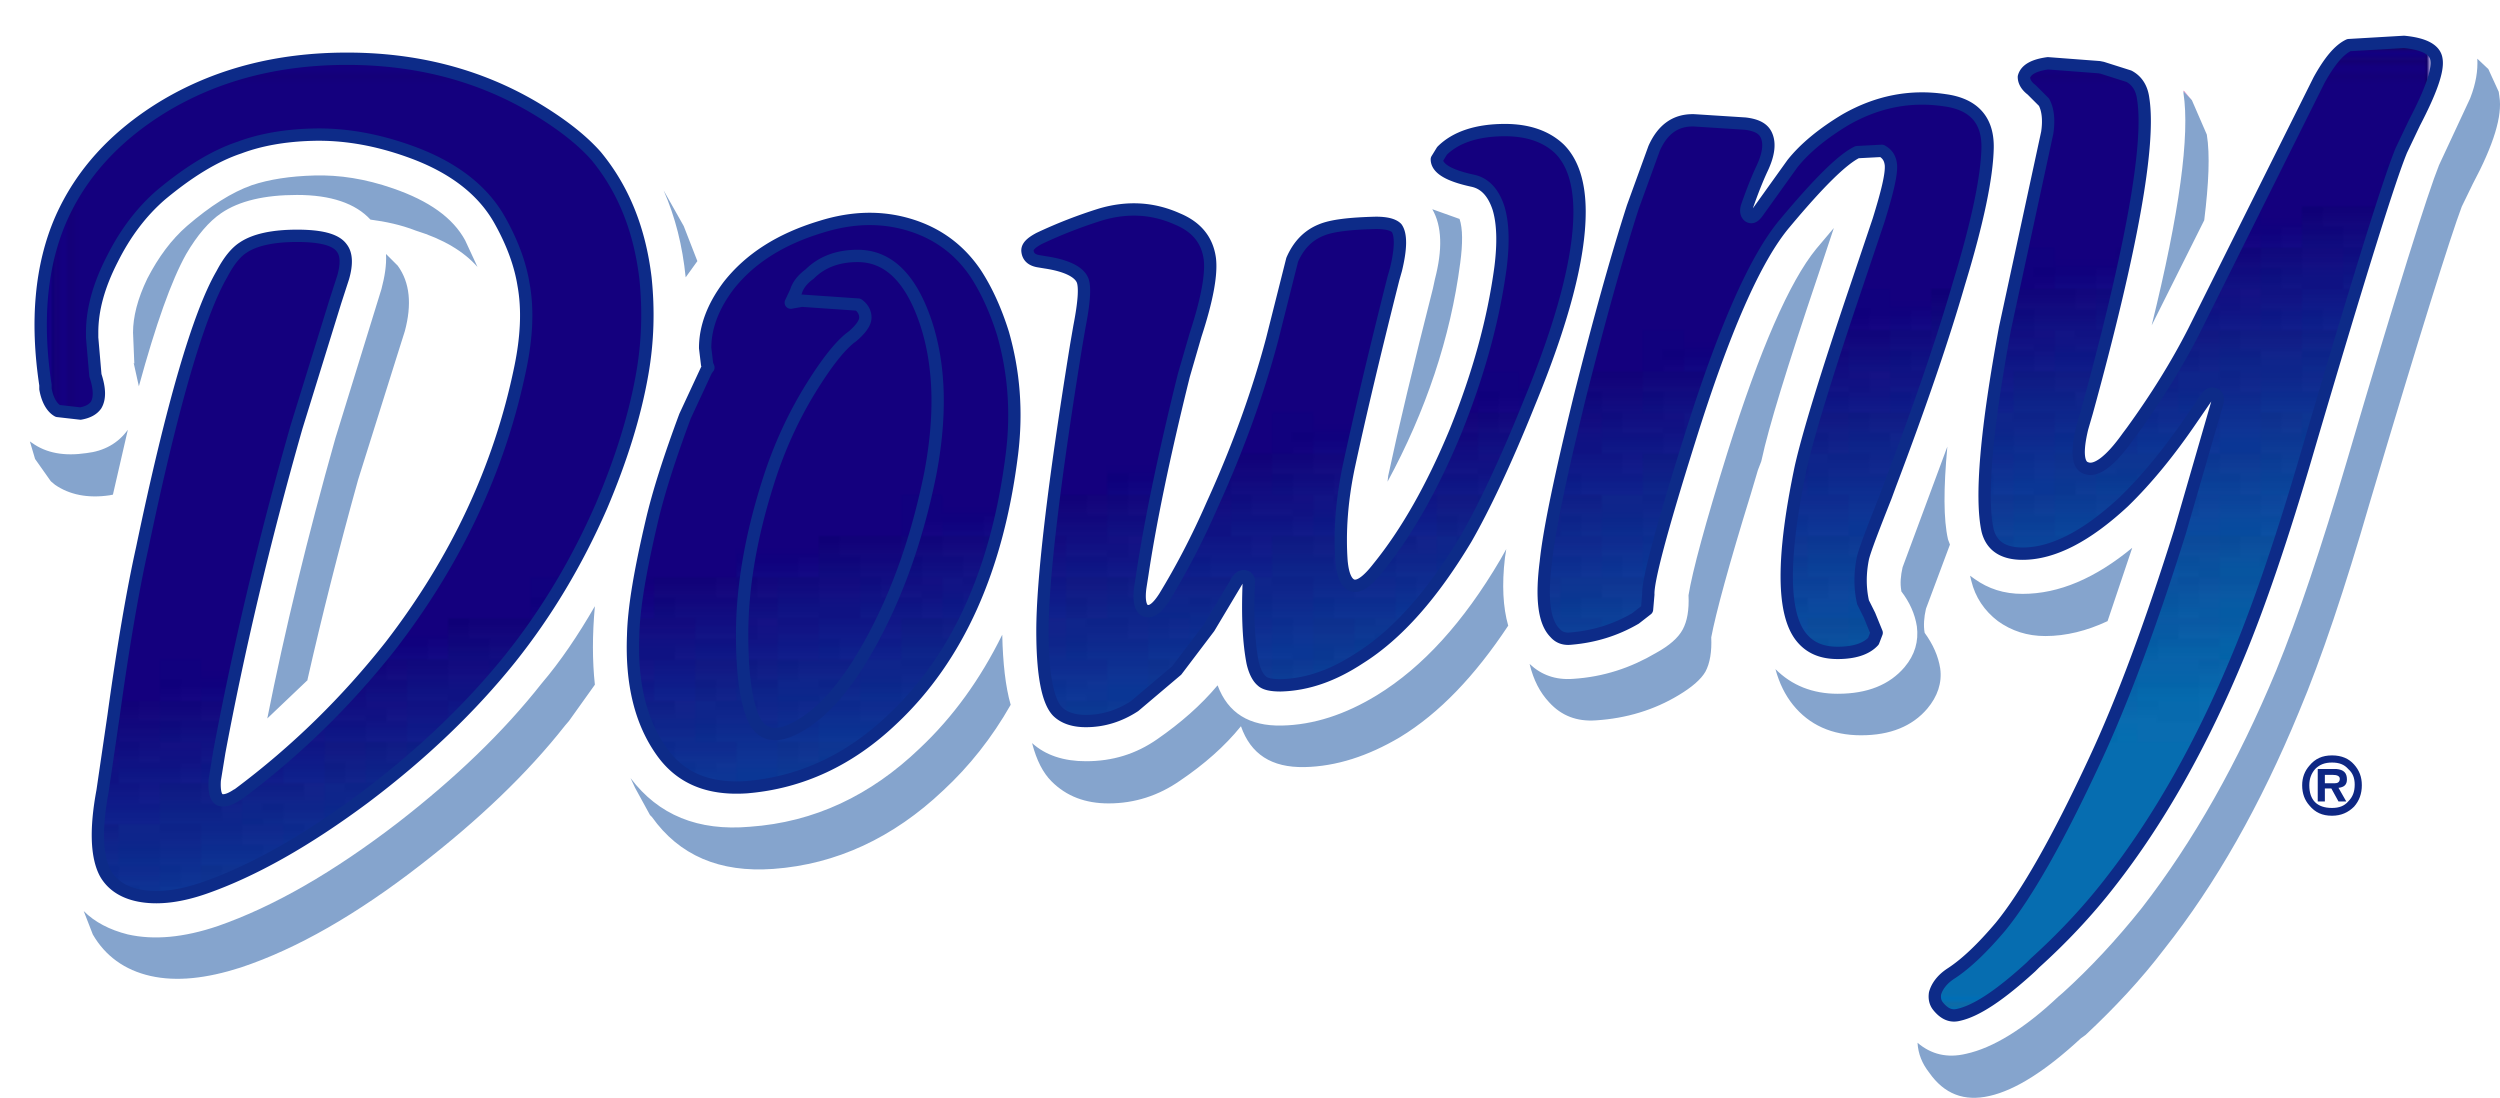 Downy Blue logo colors